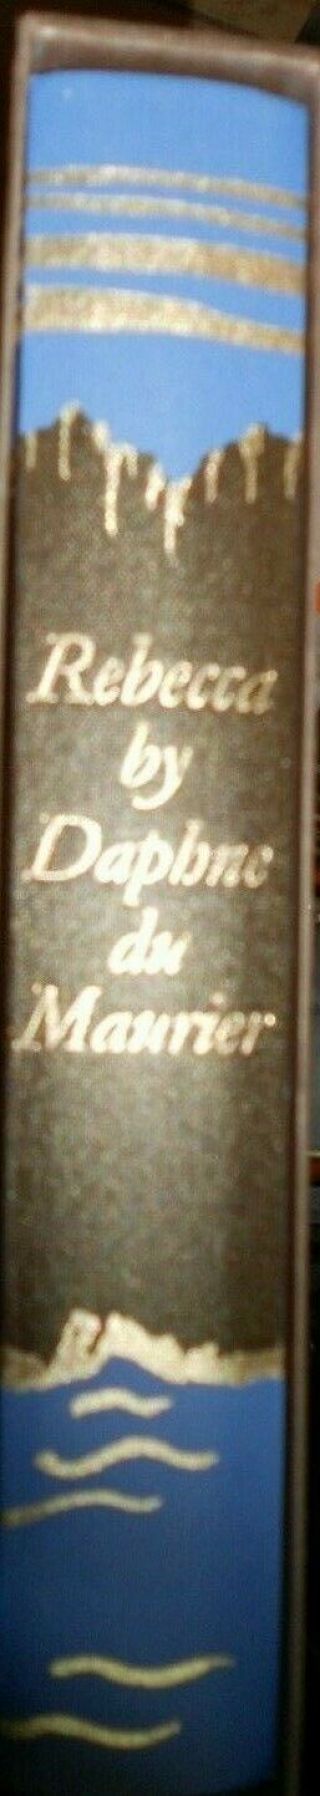 Rebecca By Daphne Du Maurier - Folio Society